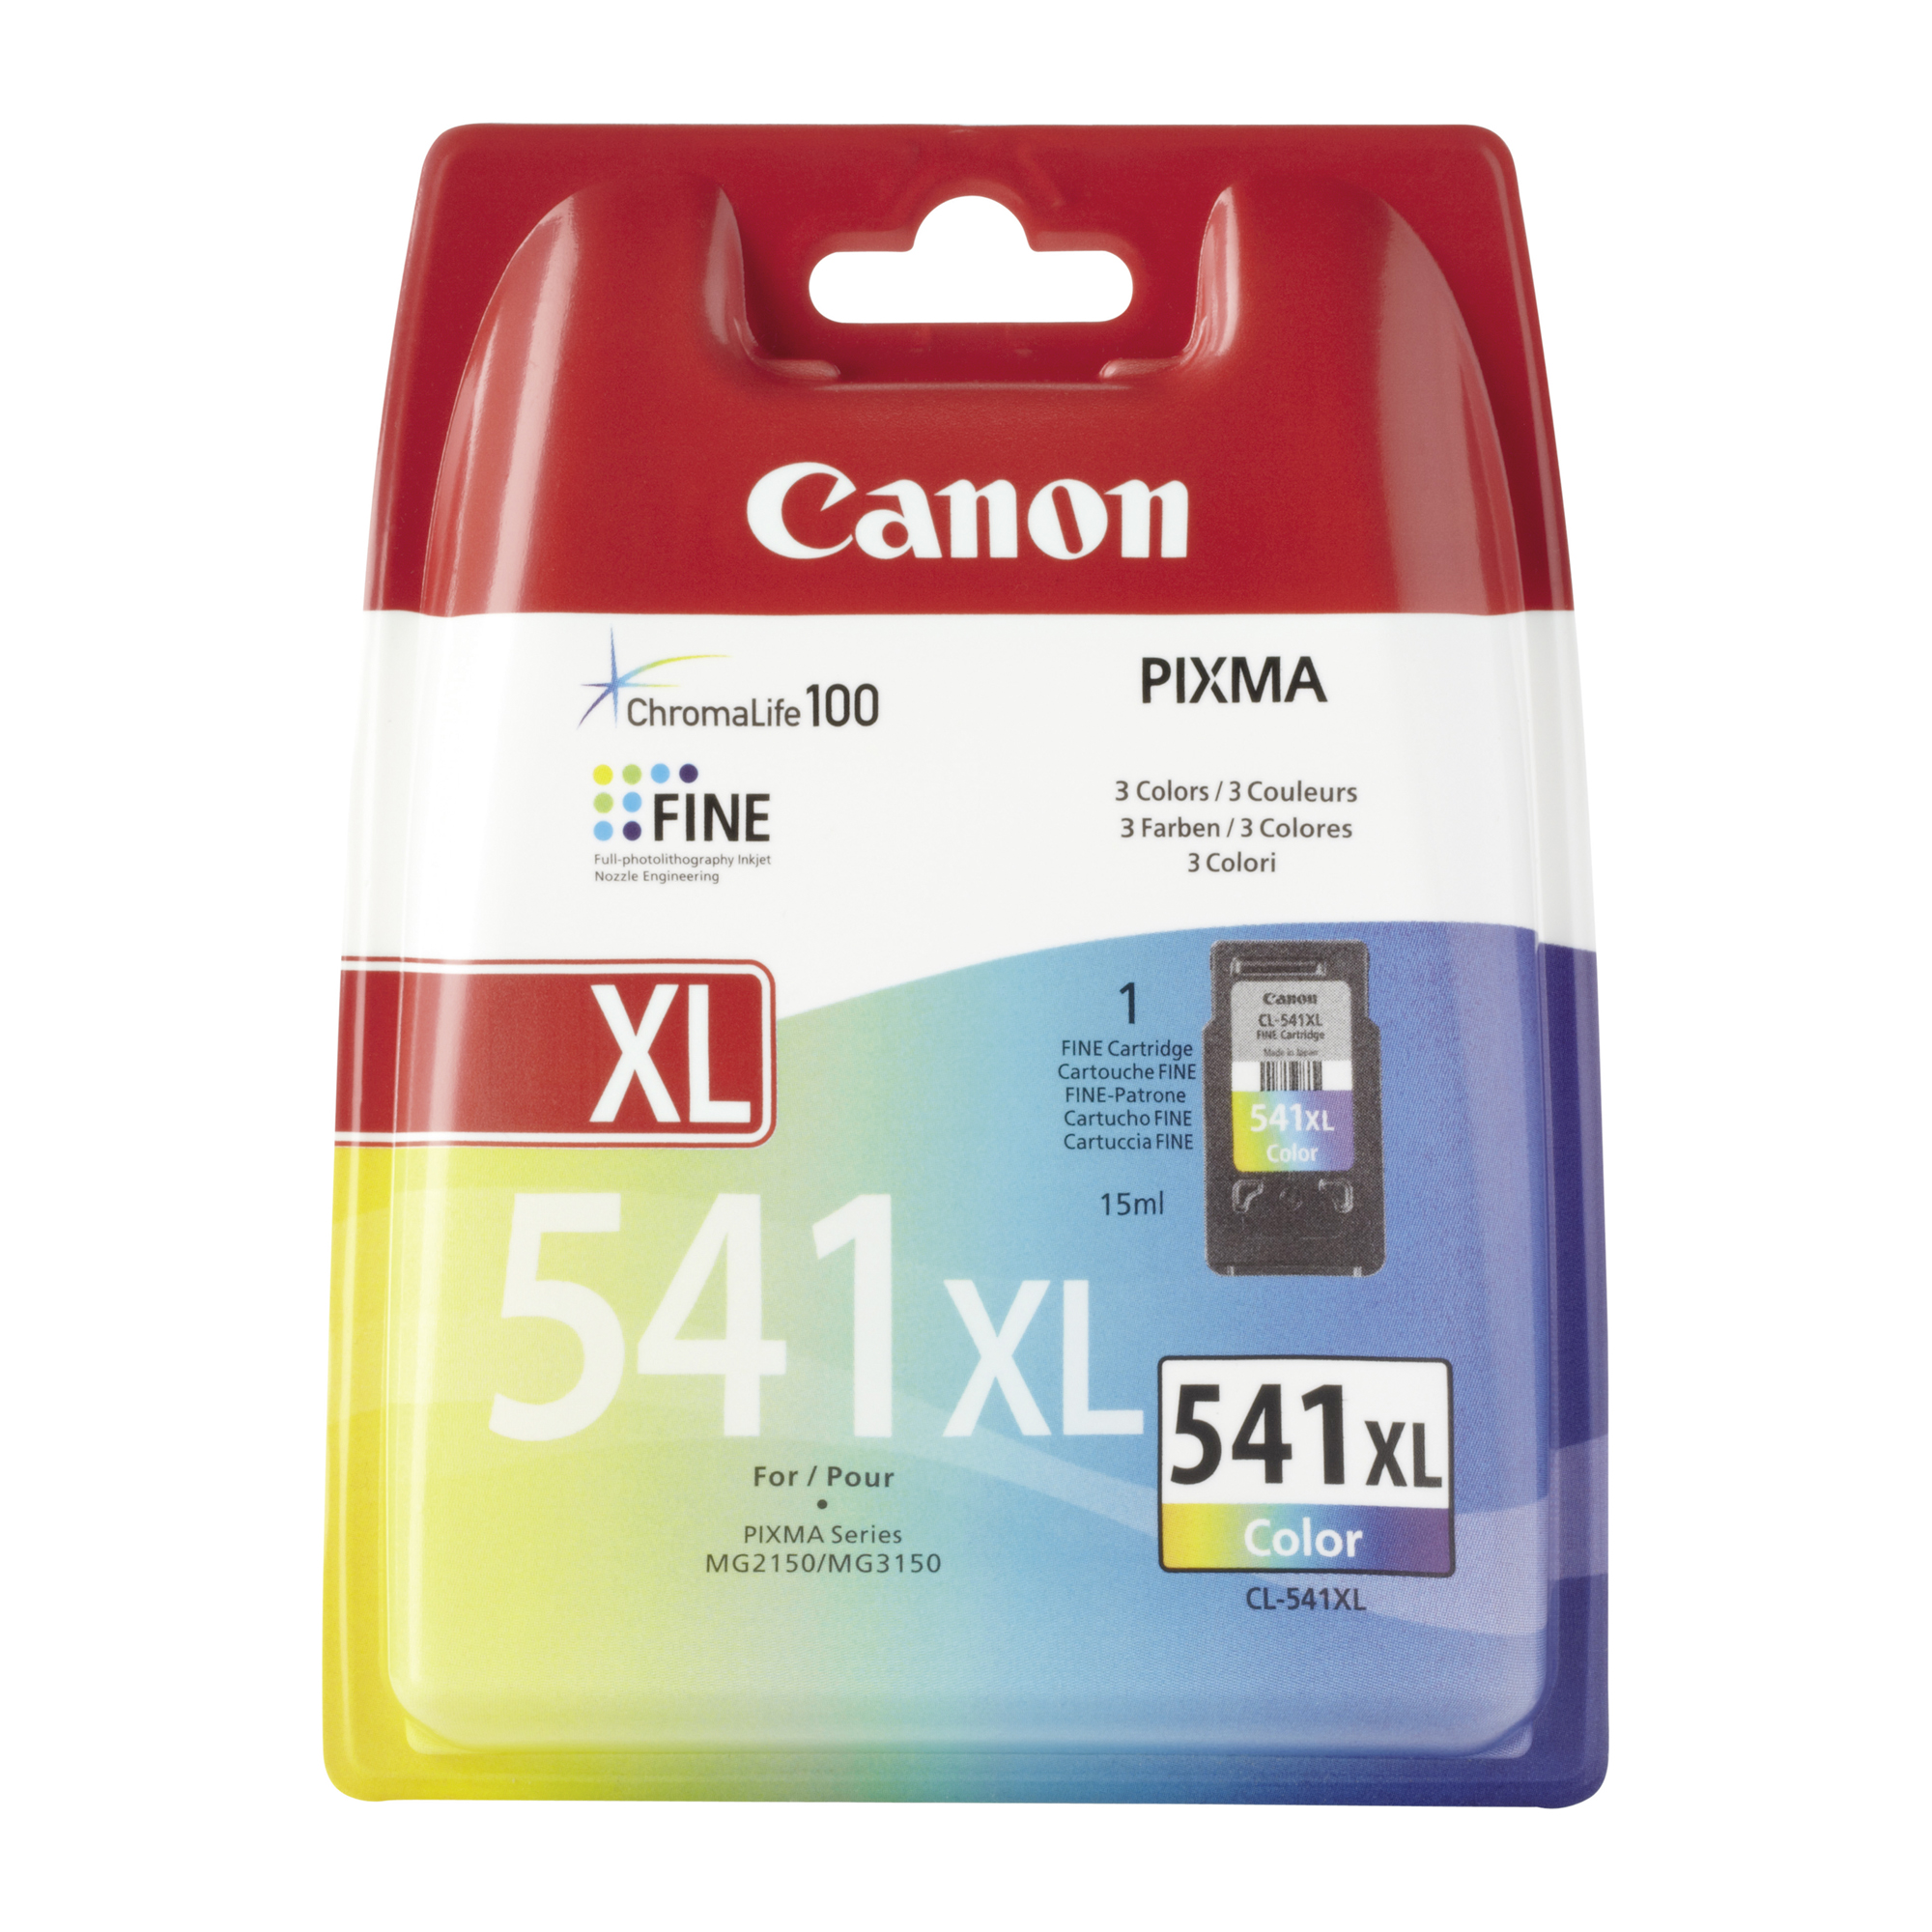 Original Canon PG-540 CL-541 Cartridge Suitable For MG3250 3150 MX375 395  532 Printer